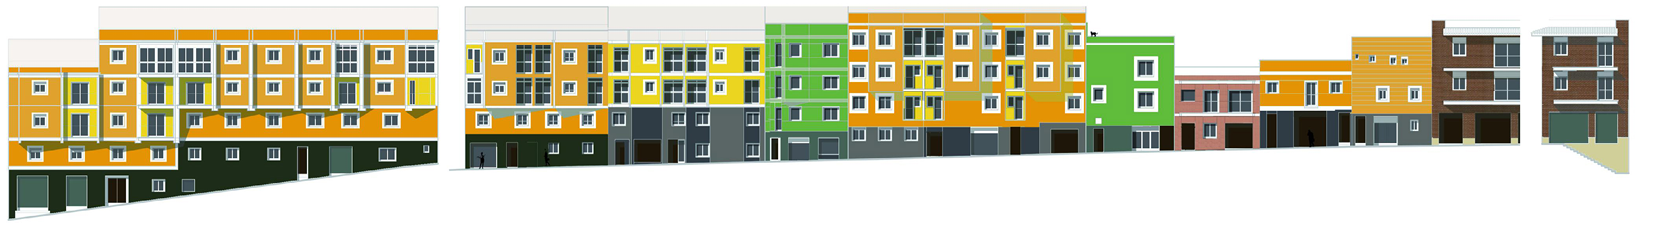 Fig. 5/ Estudio cromático de fachadas, paisaje urbano.